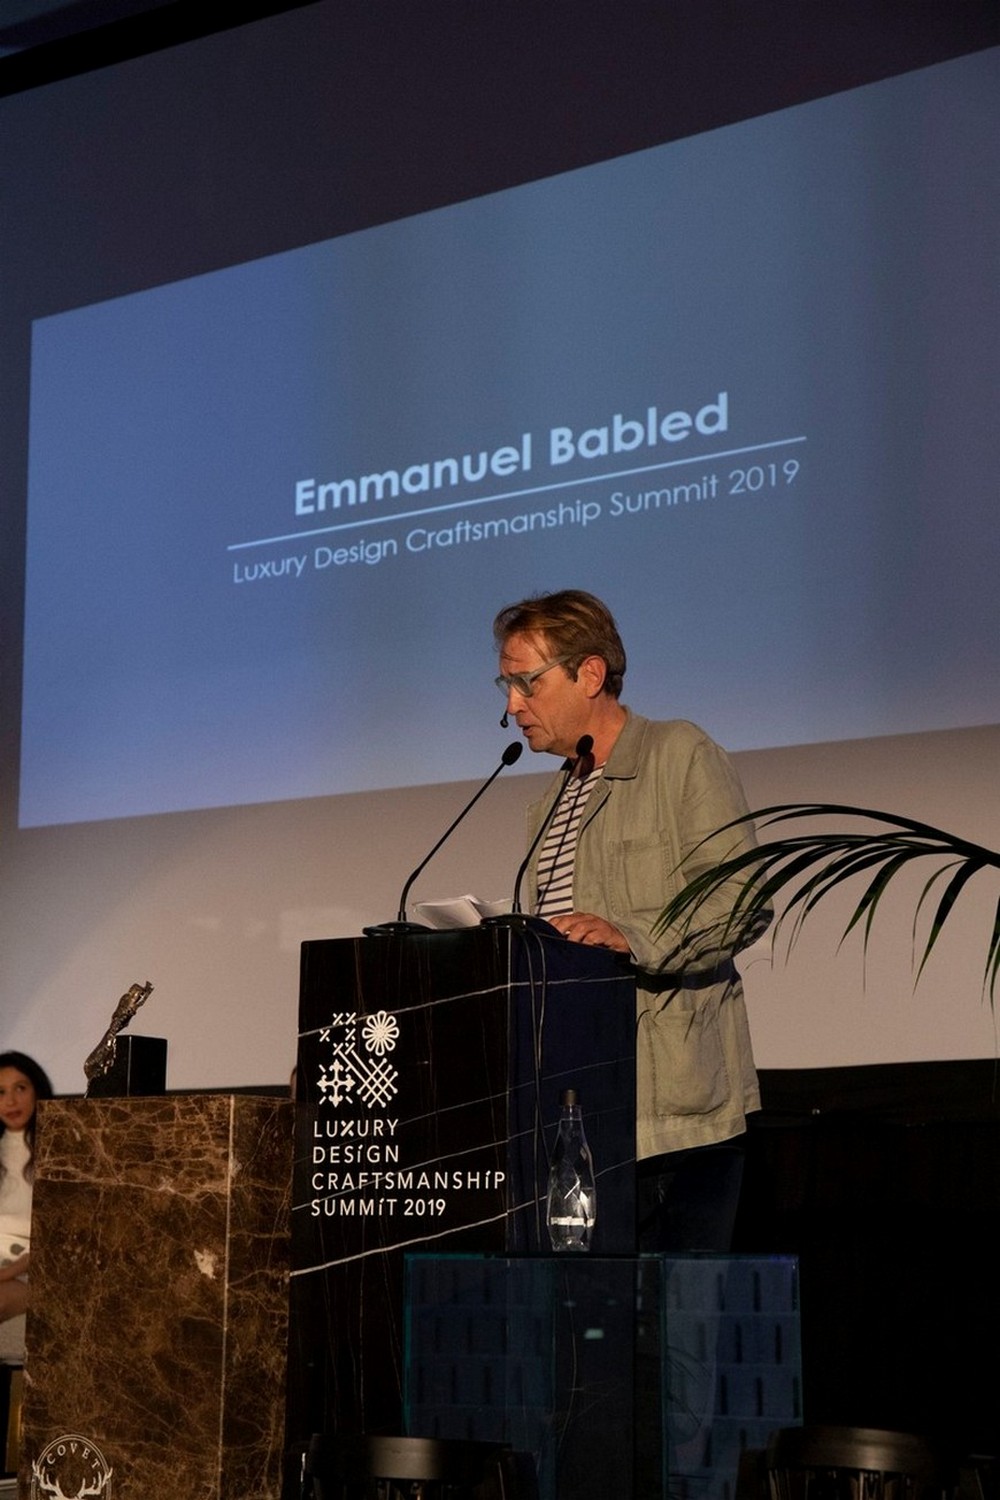 Emmanuel Babled Shows The Potential Of High-Quality Craftsmanship